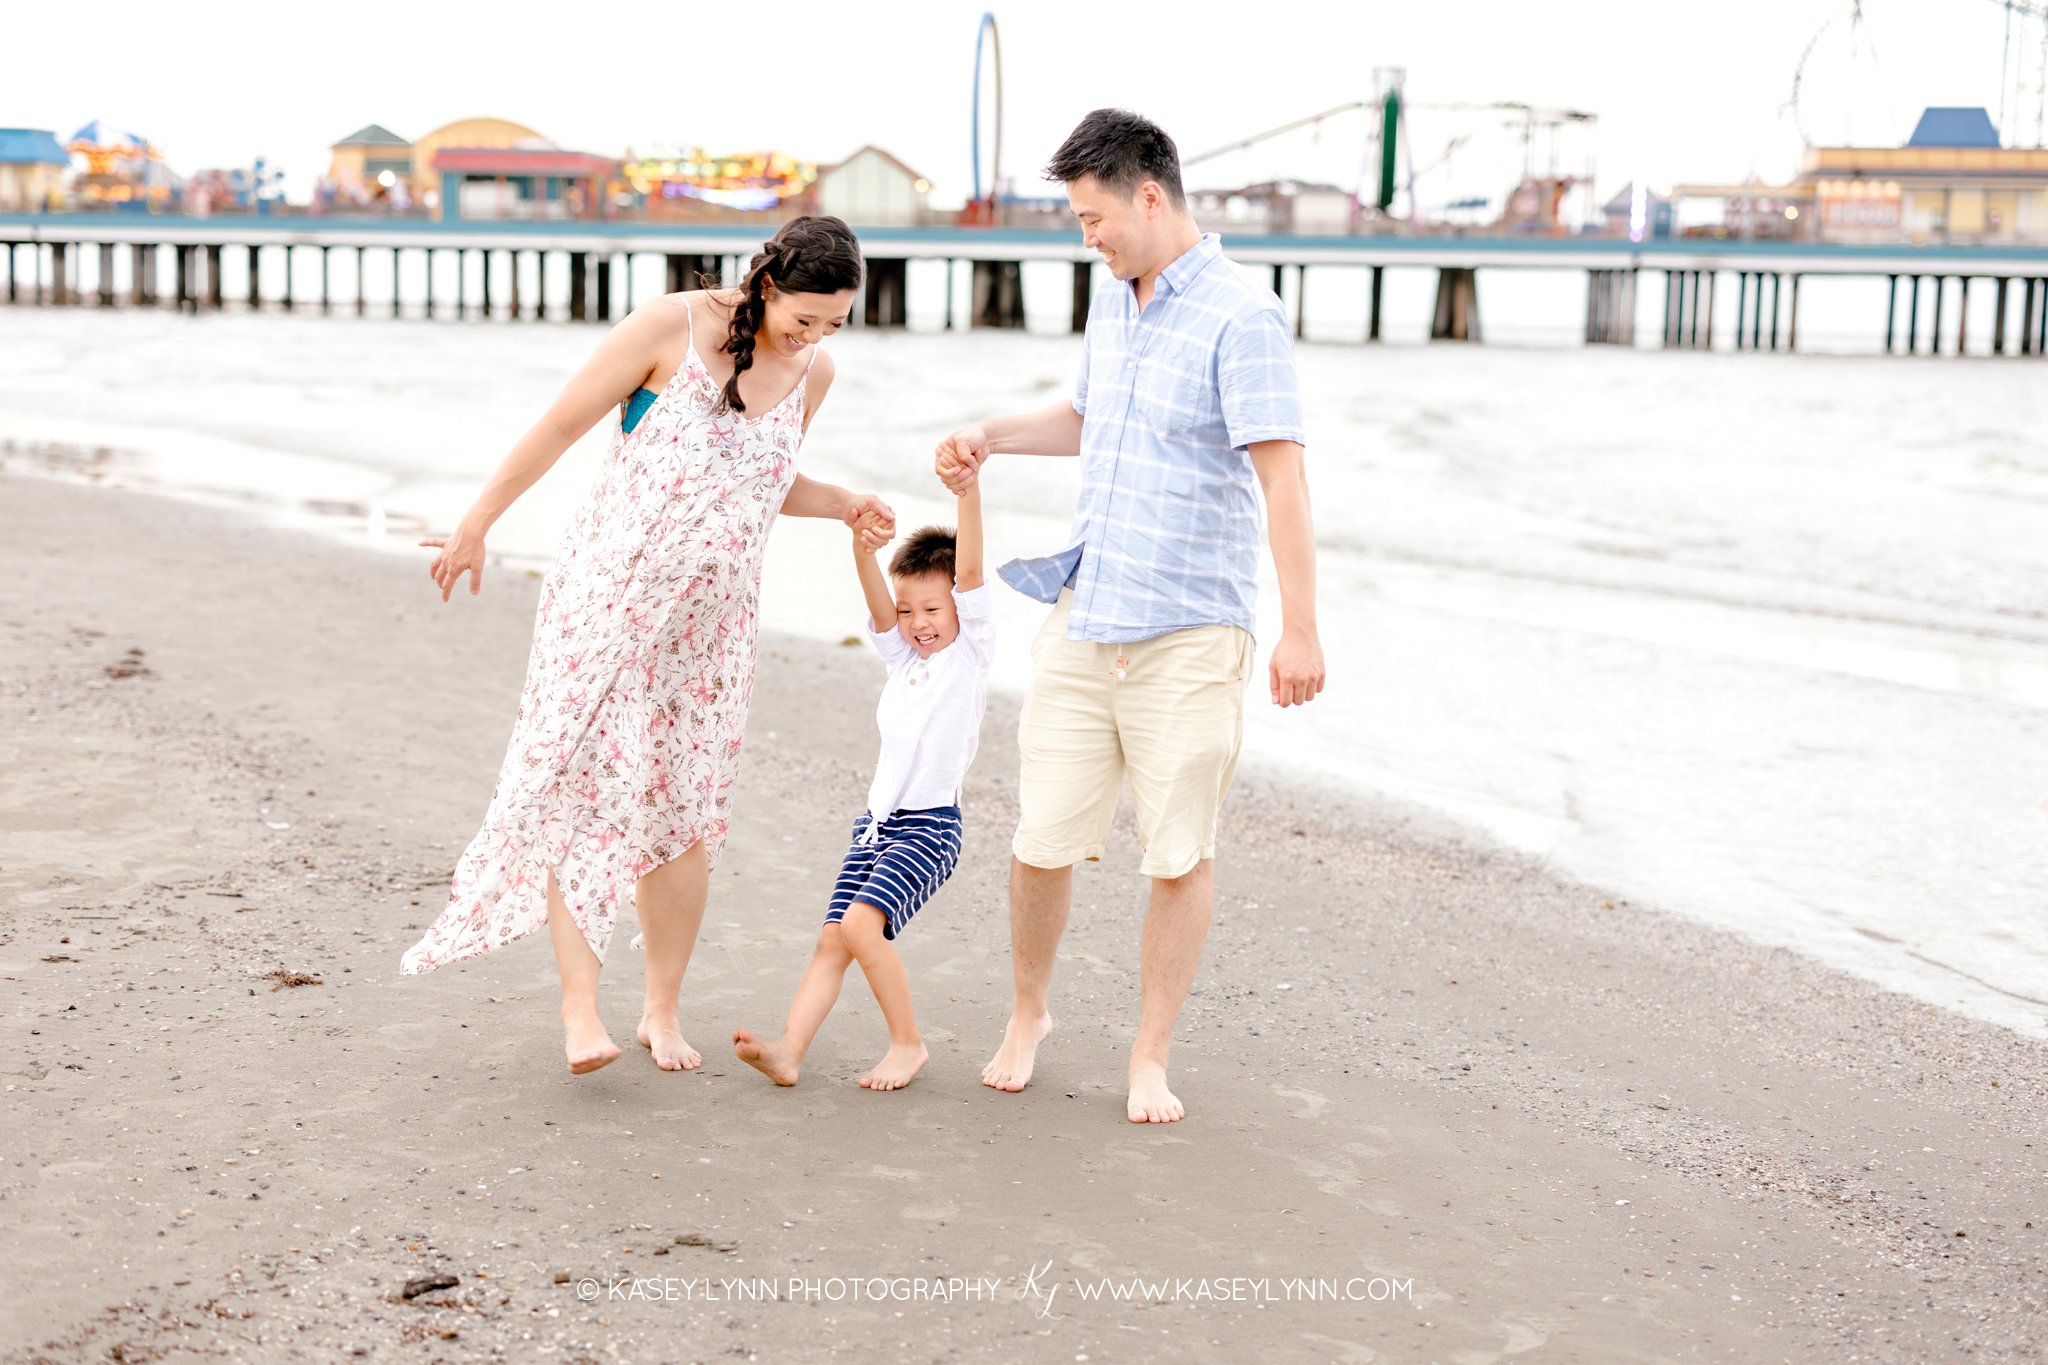 Beach Family Session / Kasey Lynn Photography